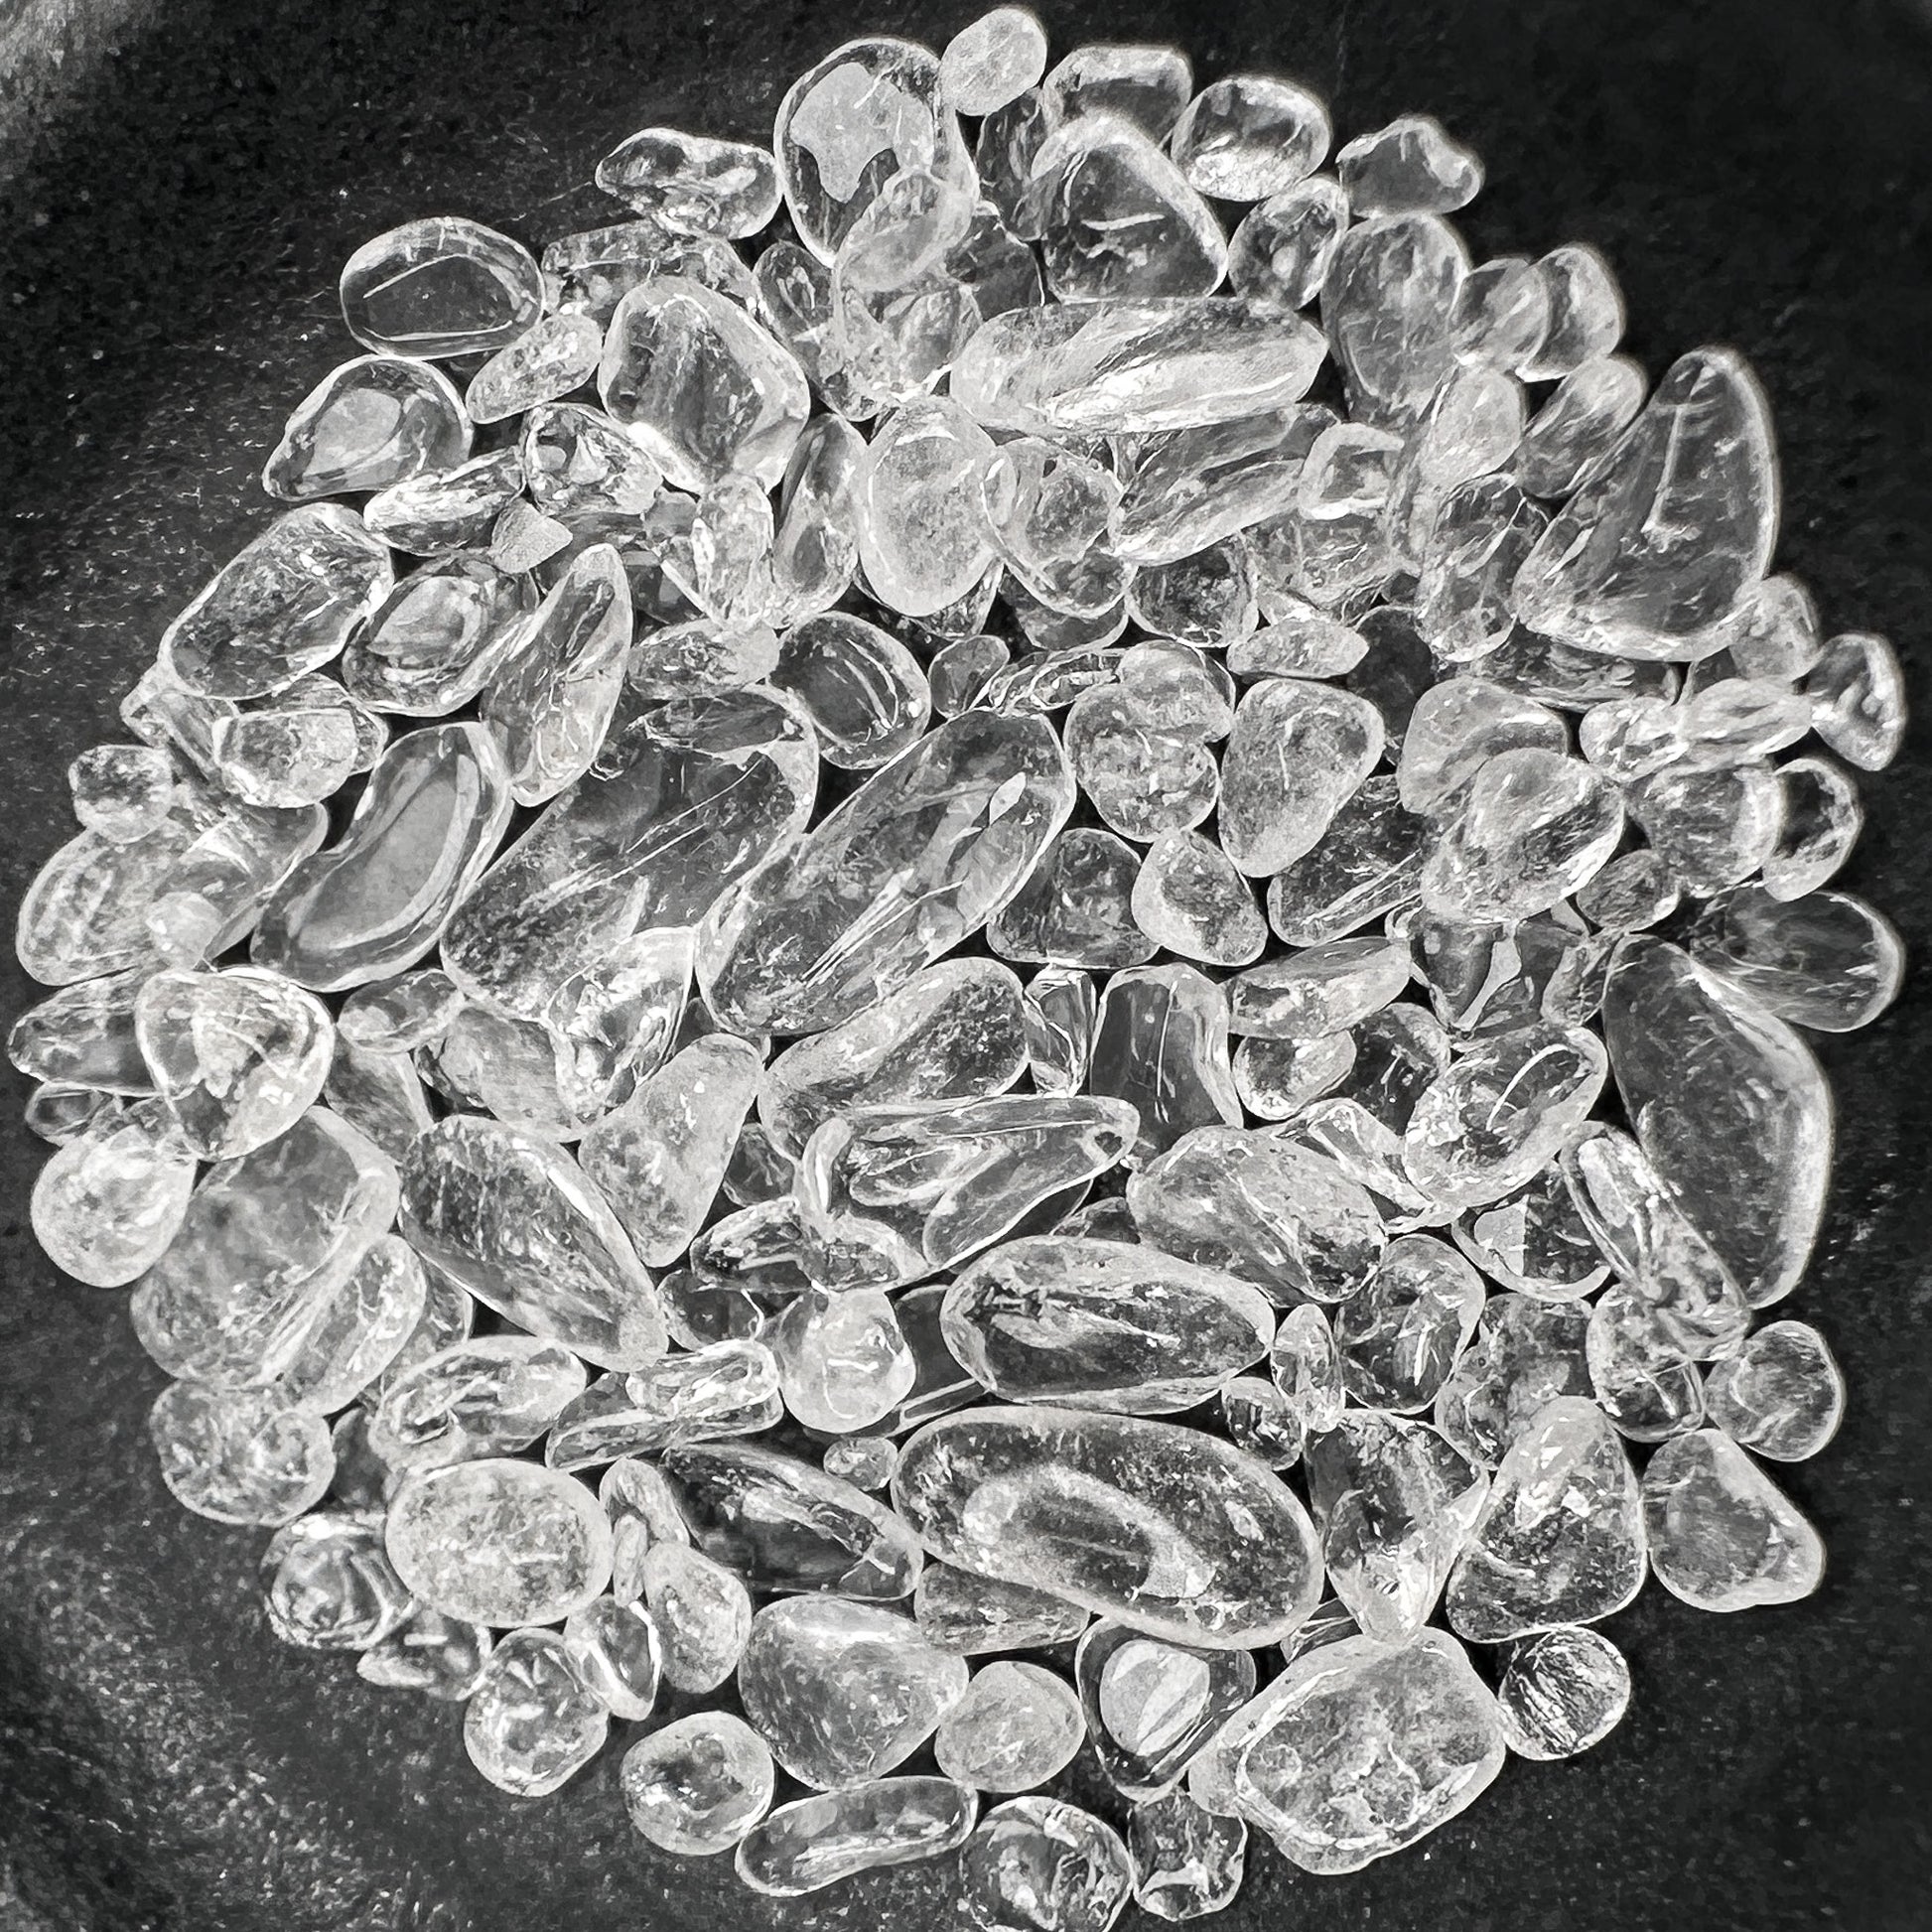 Crystal Quartz Tiny Tumbled Chips - 1 bag-The Bead Gallery Honolulu